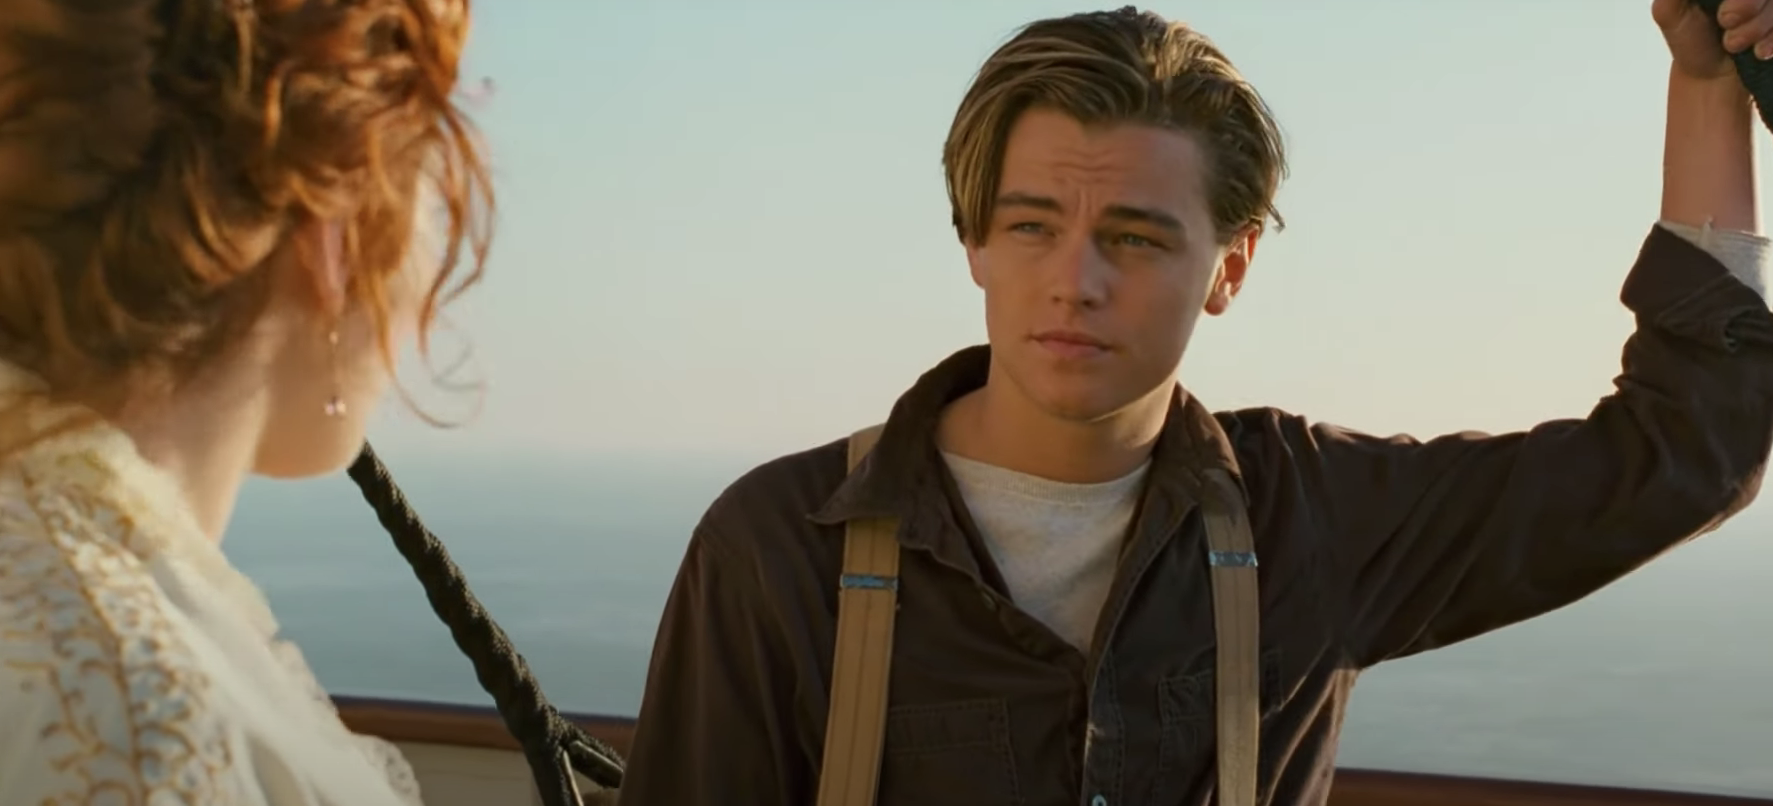 Leonardo DiCaprio (Jack Dawson) et Kate Winslet (Rose DeWitt Bukater) - Titanic